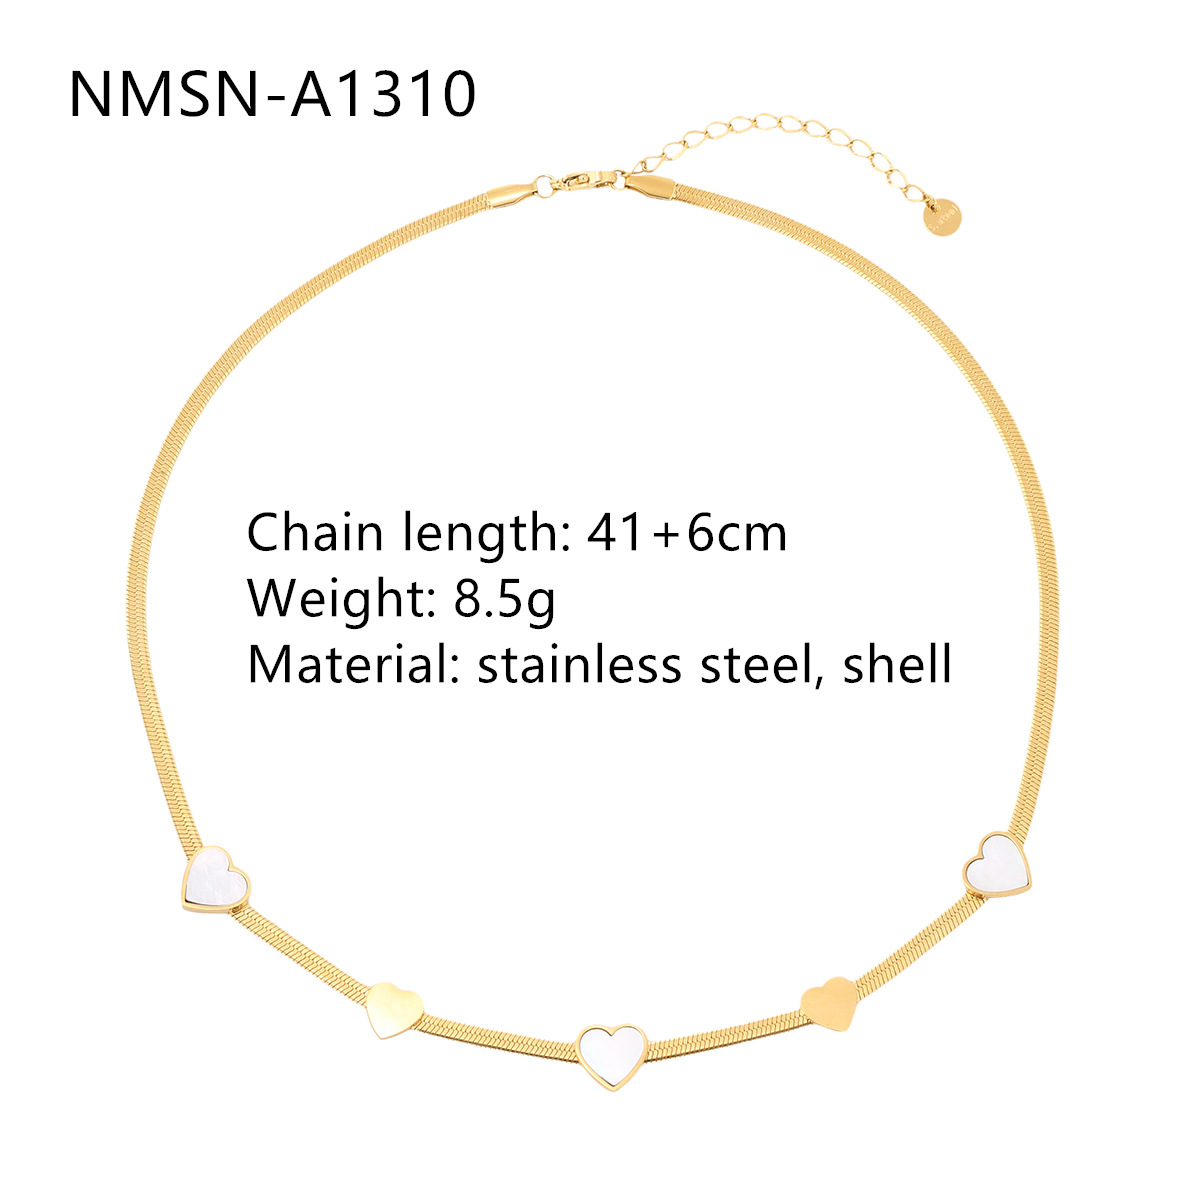 NMSN-A1310